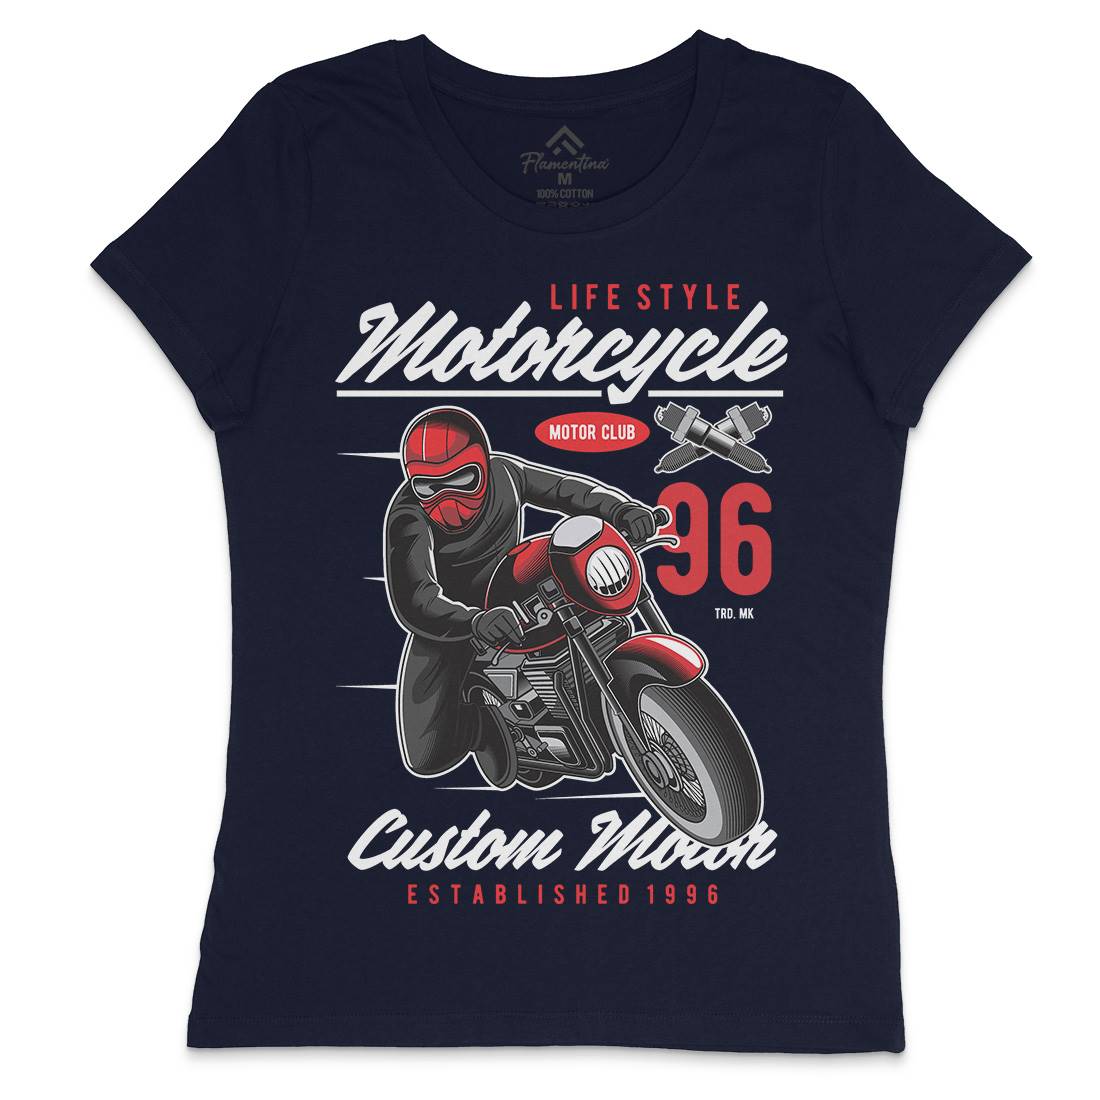 Lifestyle Womens Crew Neck T-Shirt Motorcycles C399